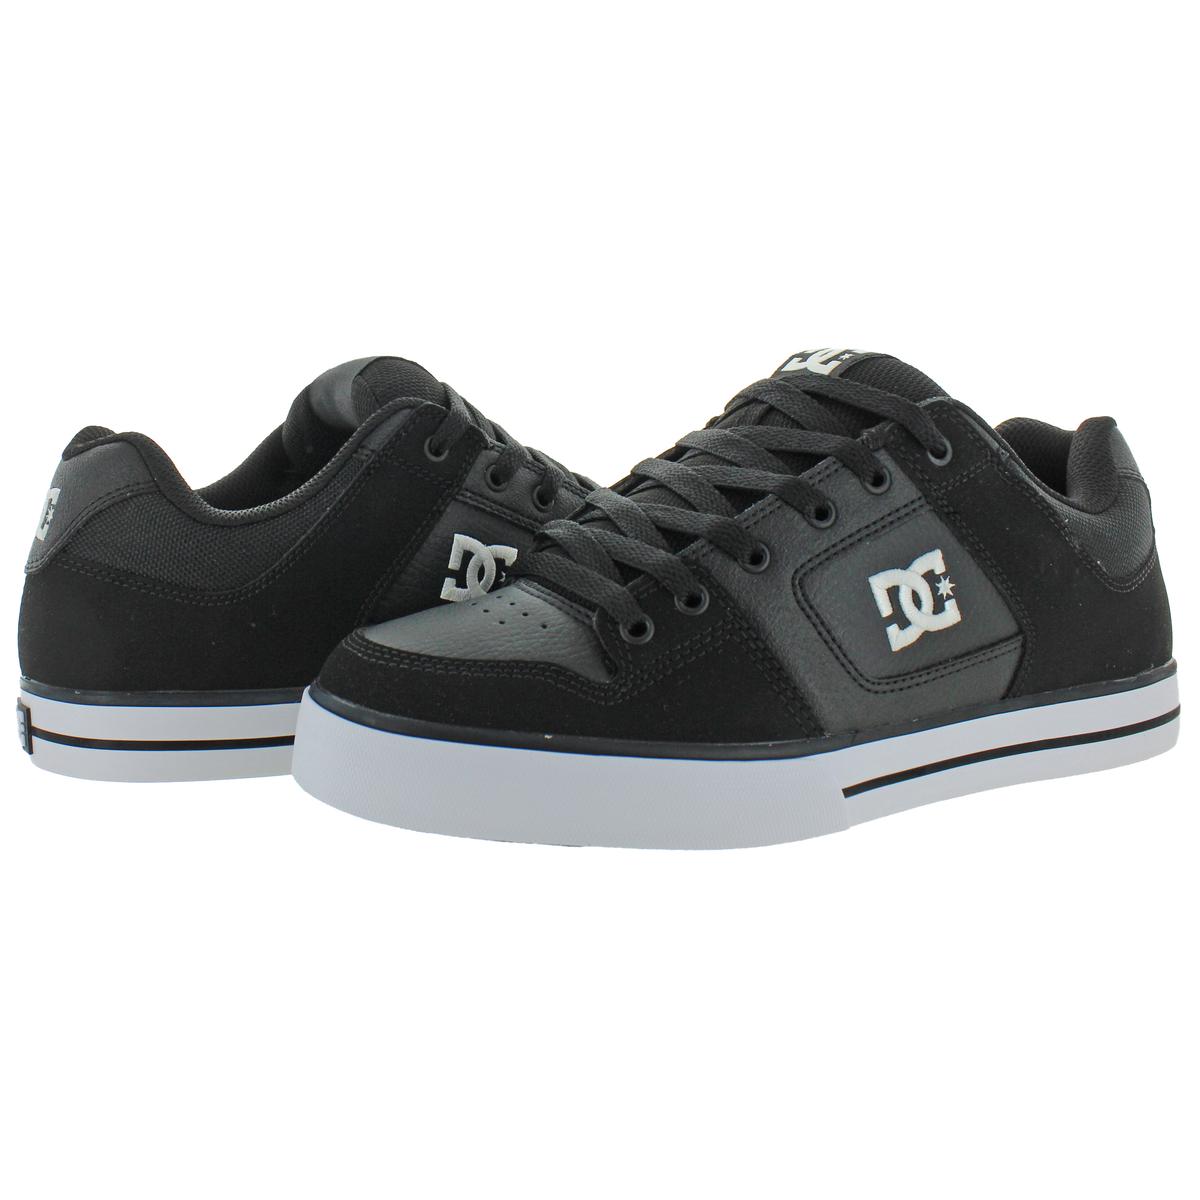 bouwer leraar eiwit DC Mens Pure Black Leather Lace-Up Skate Shoes Sneakers 8.5 Medium (D) BHFO  0985 for sale online | eBay